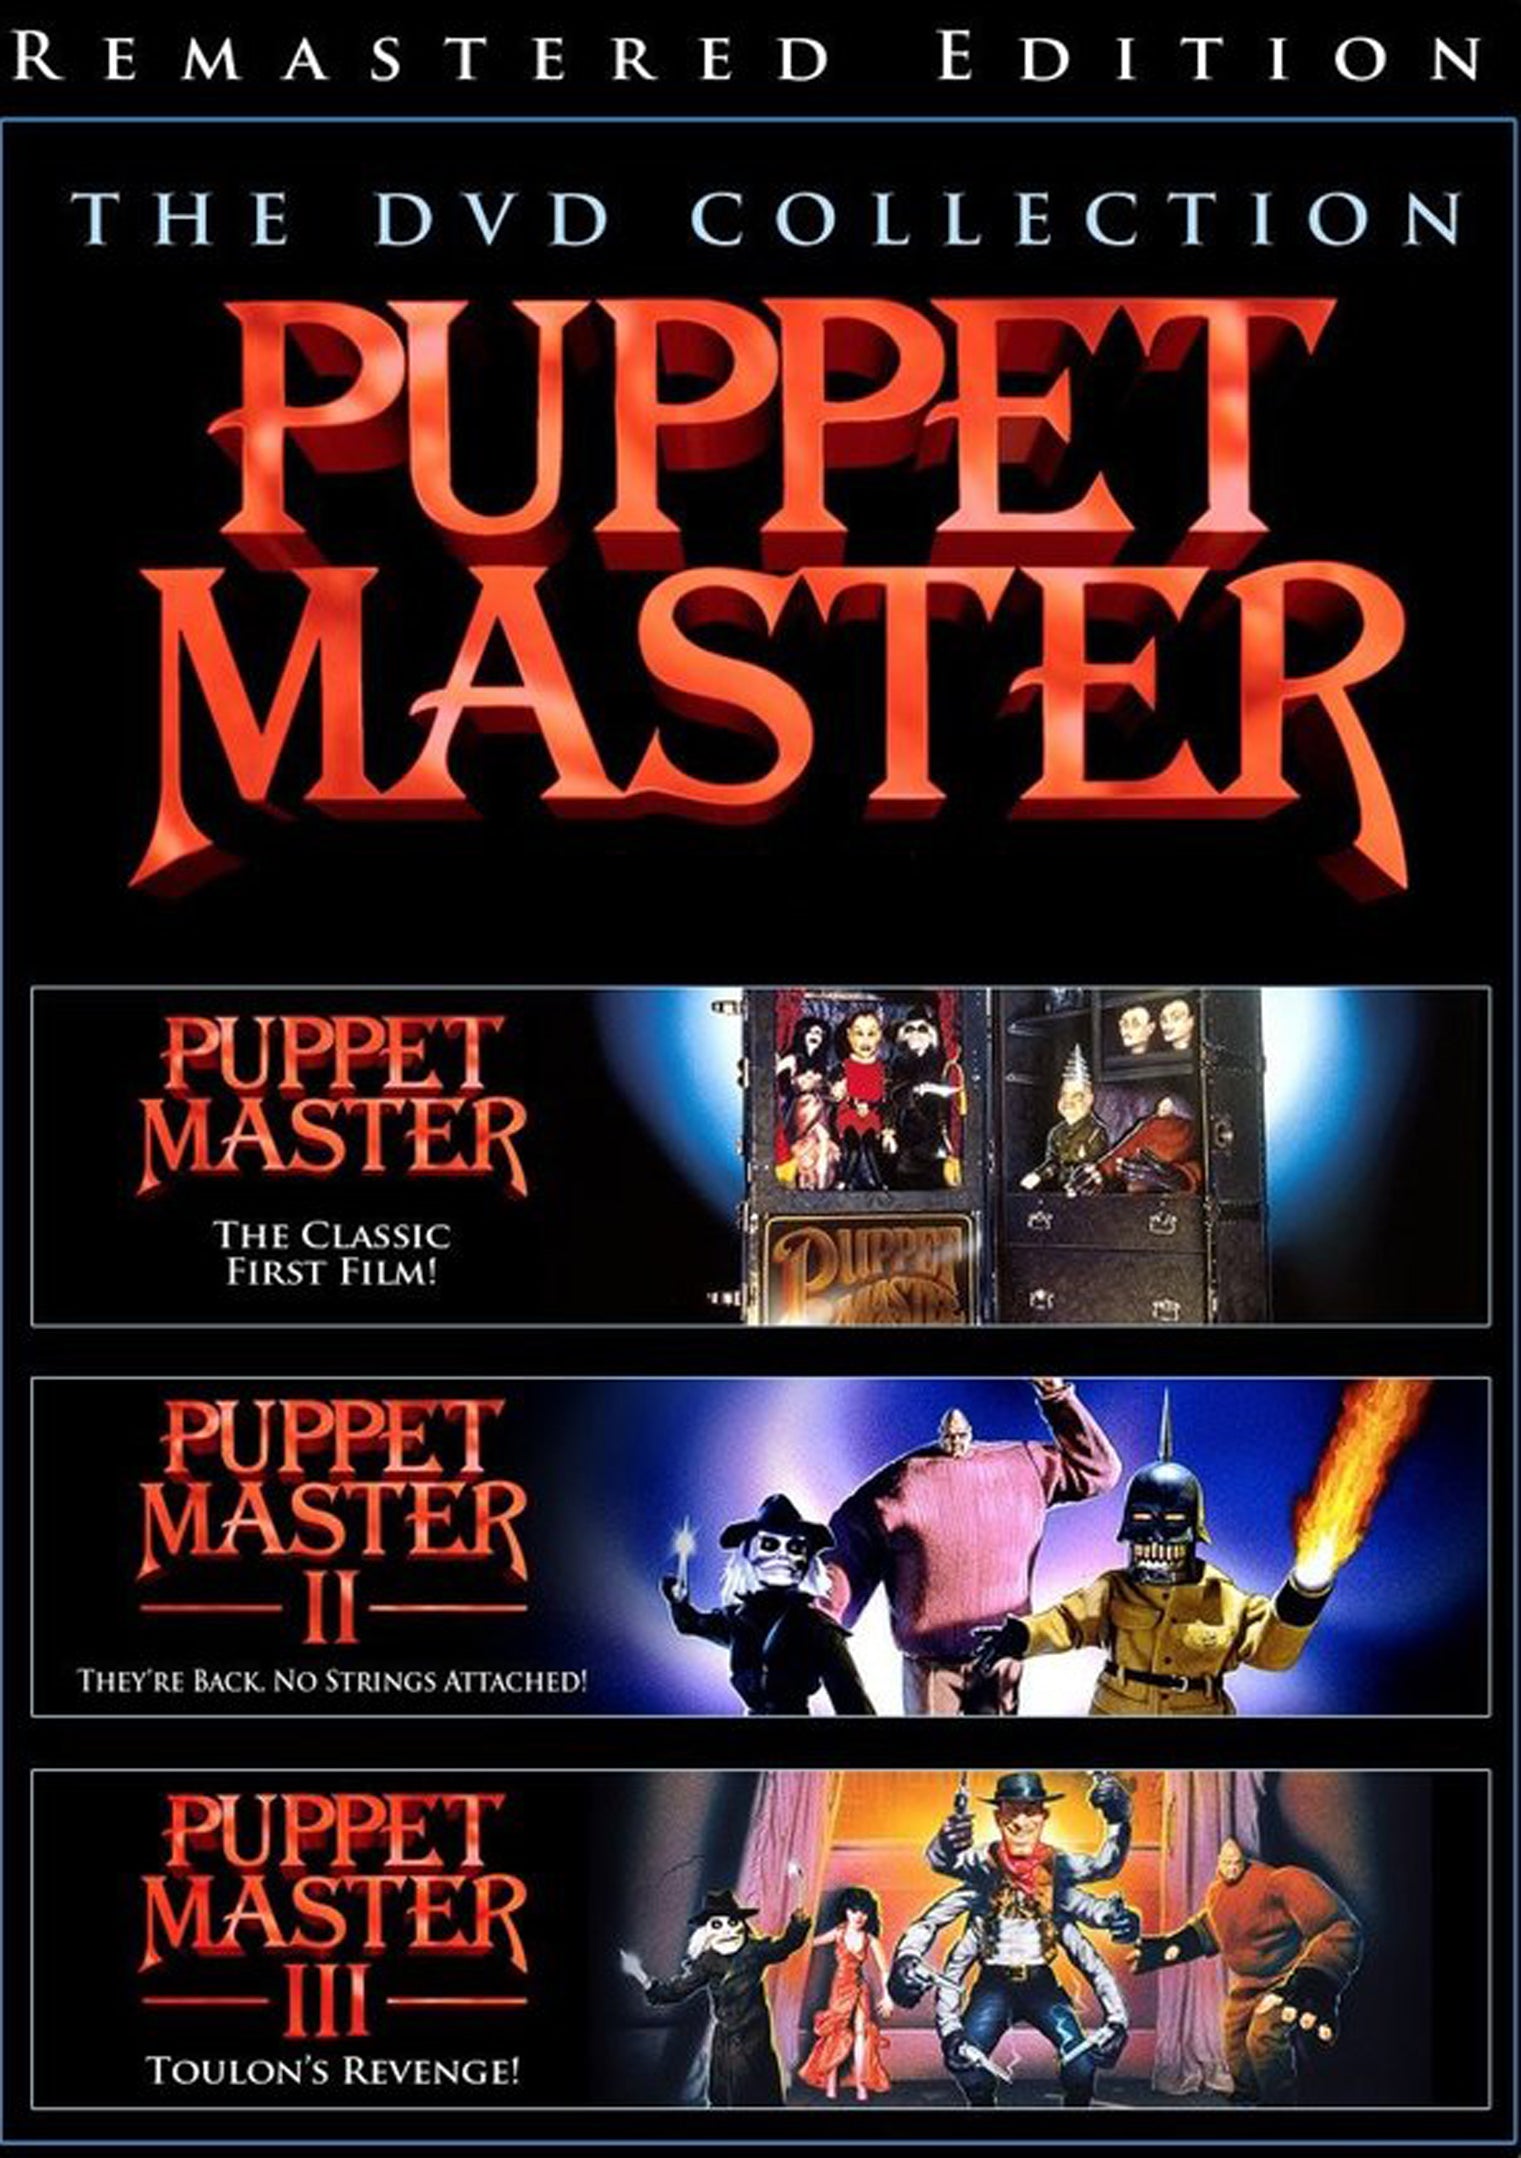 PUPPET MASTER TRILOGY DVD